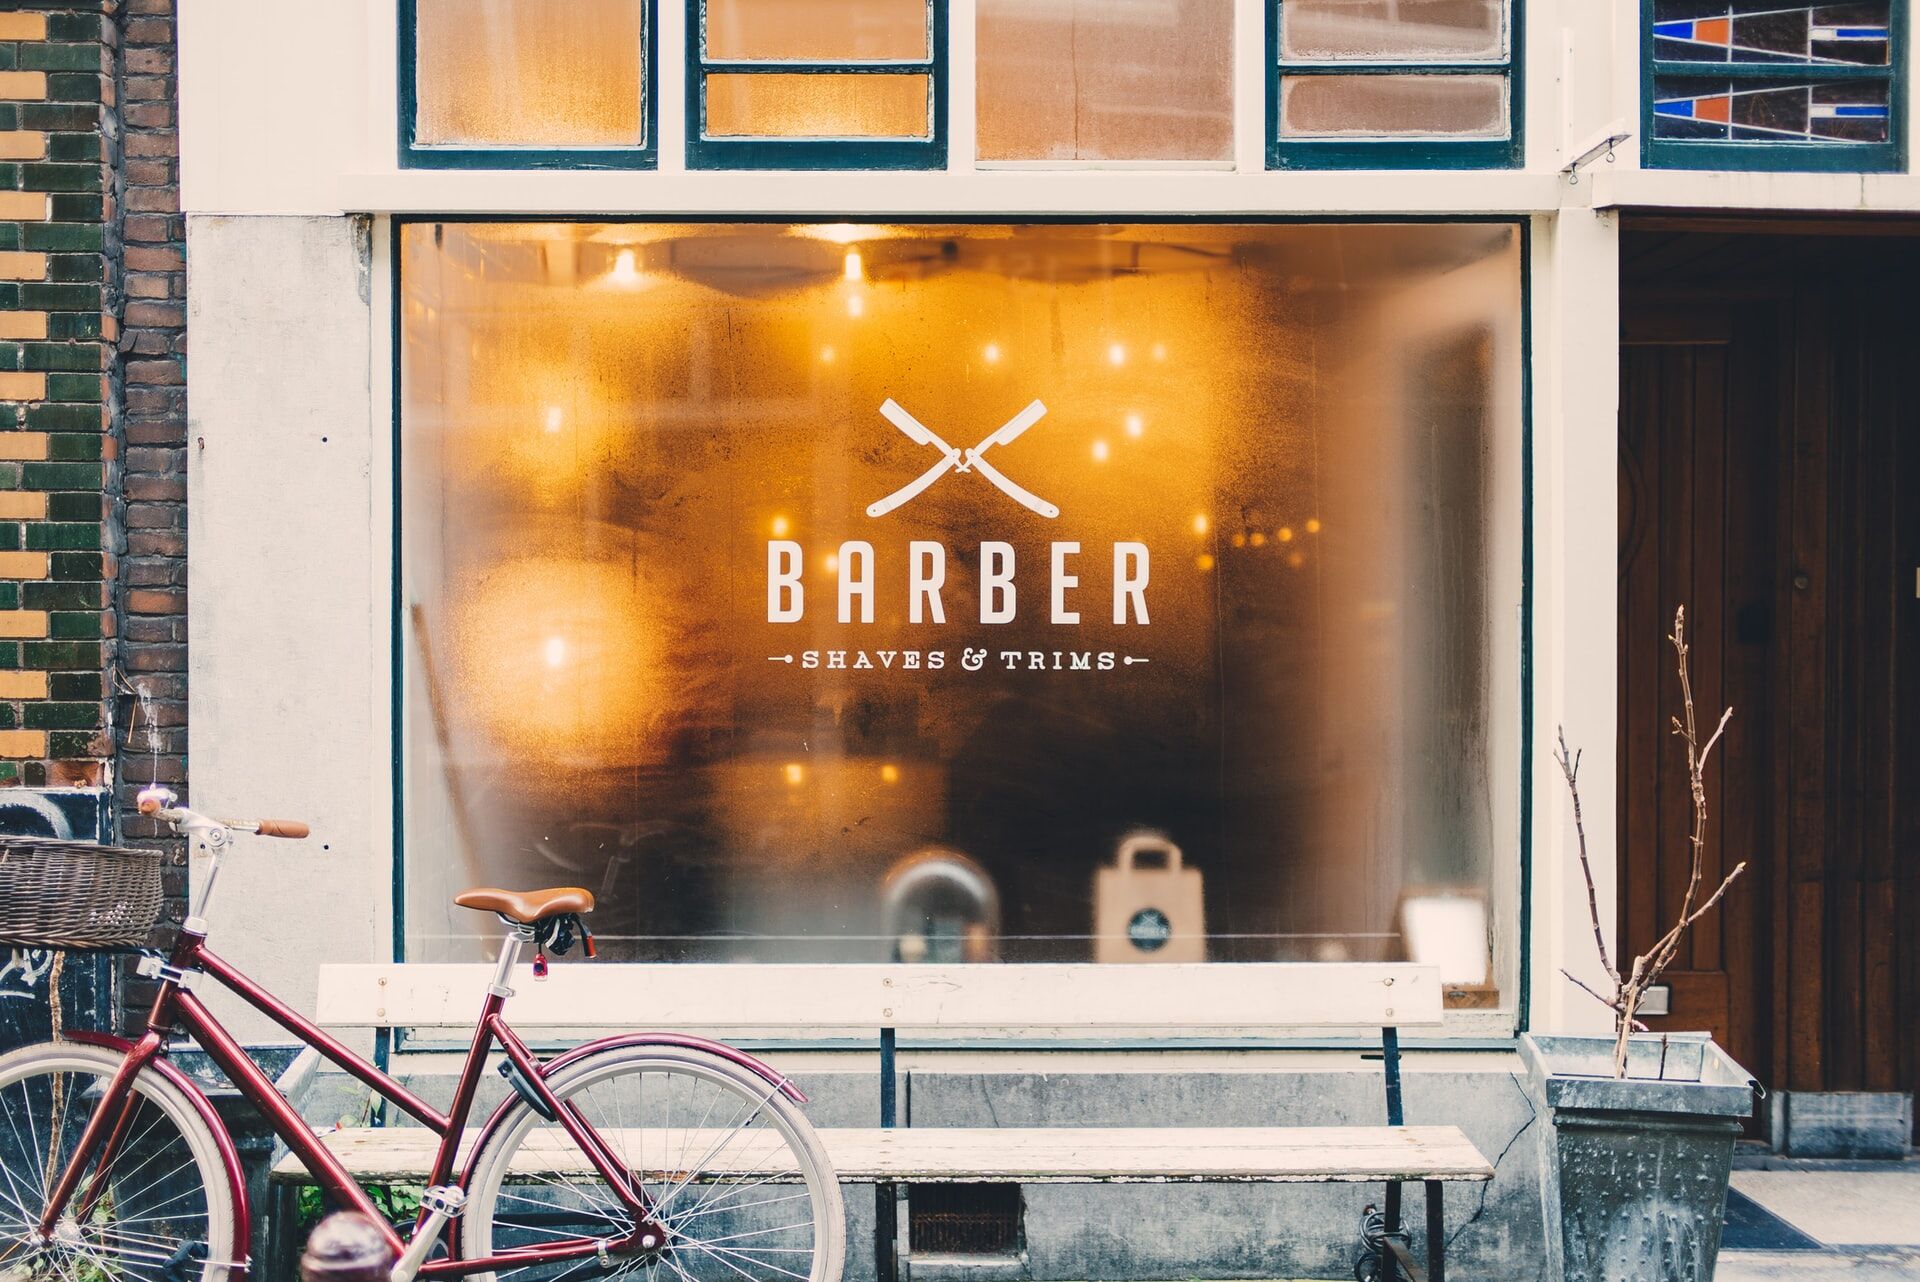 Barbershop-window